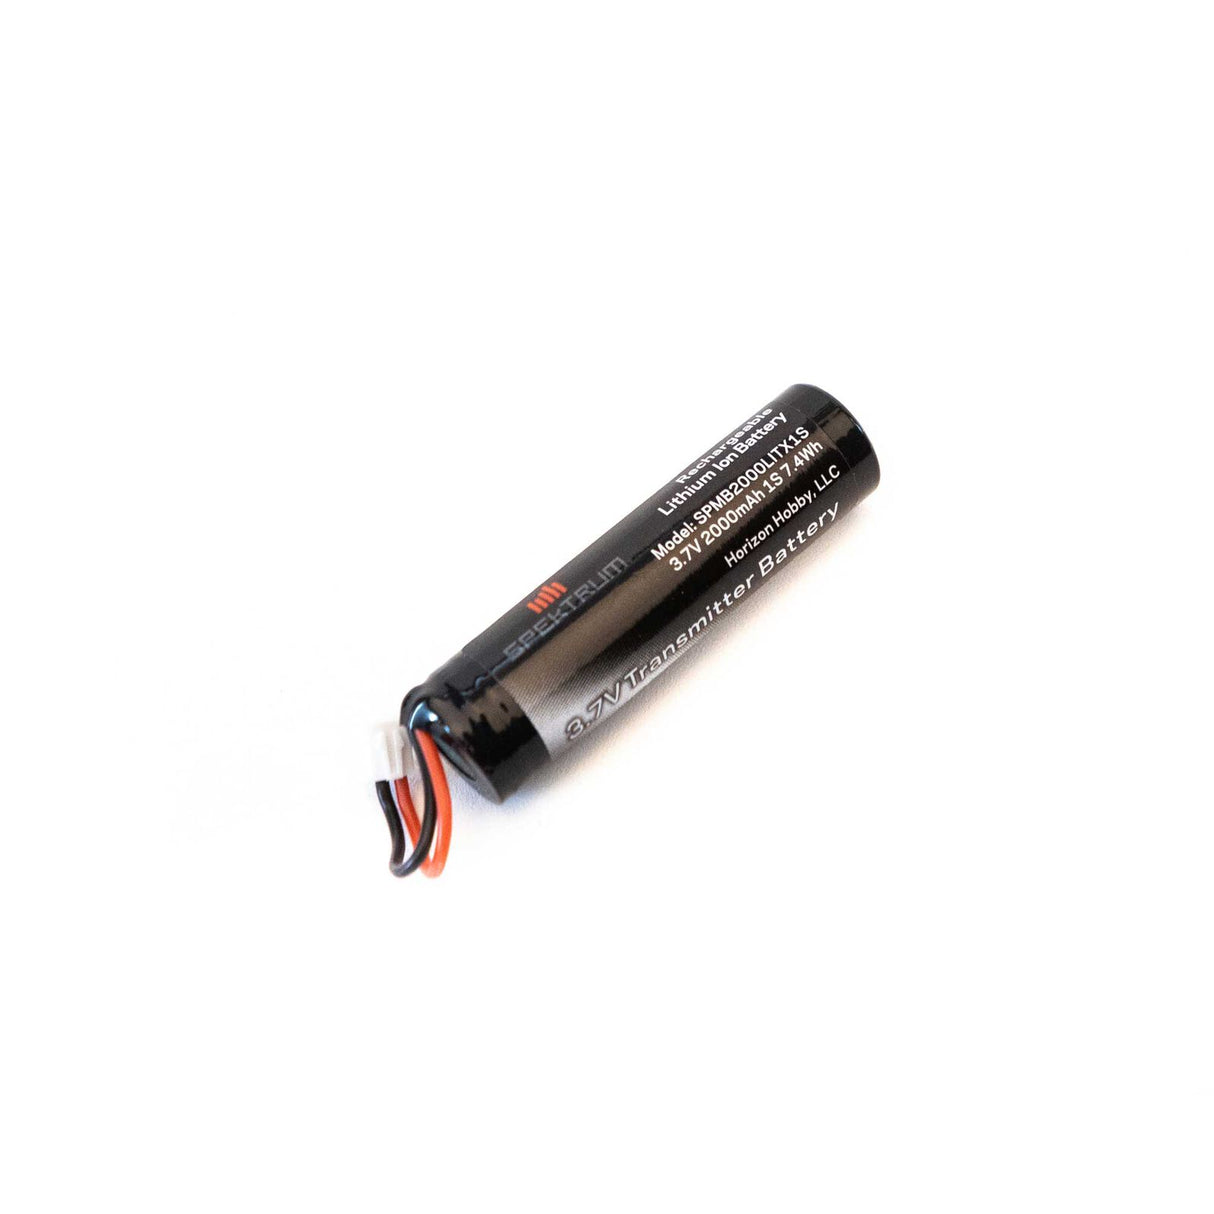 Compact 2000mAh 3.7V 1S LiPo transmitter battery for Spektrum NX6 and NX8 radio systems.